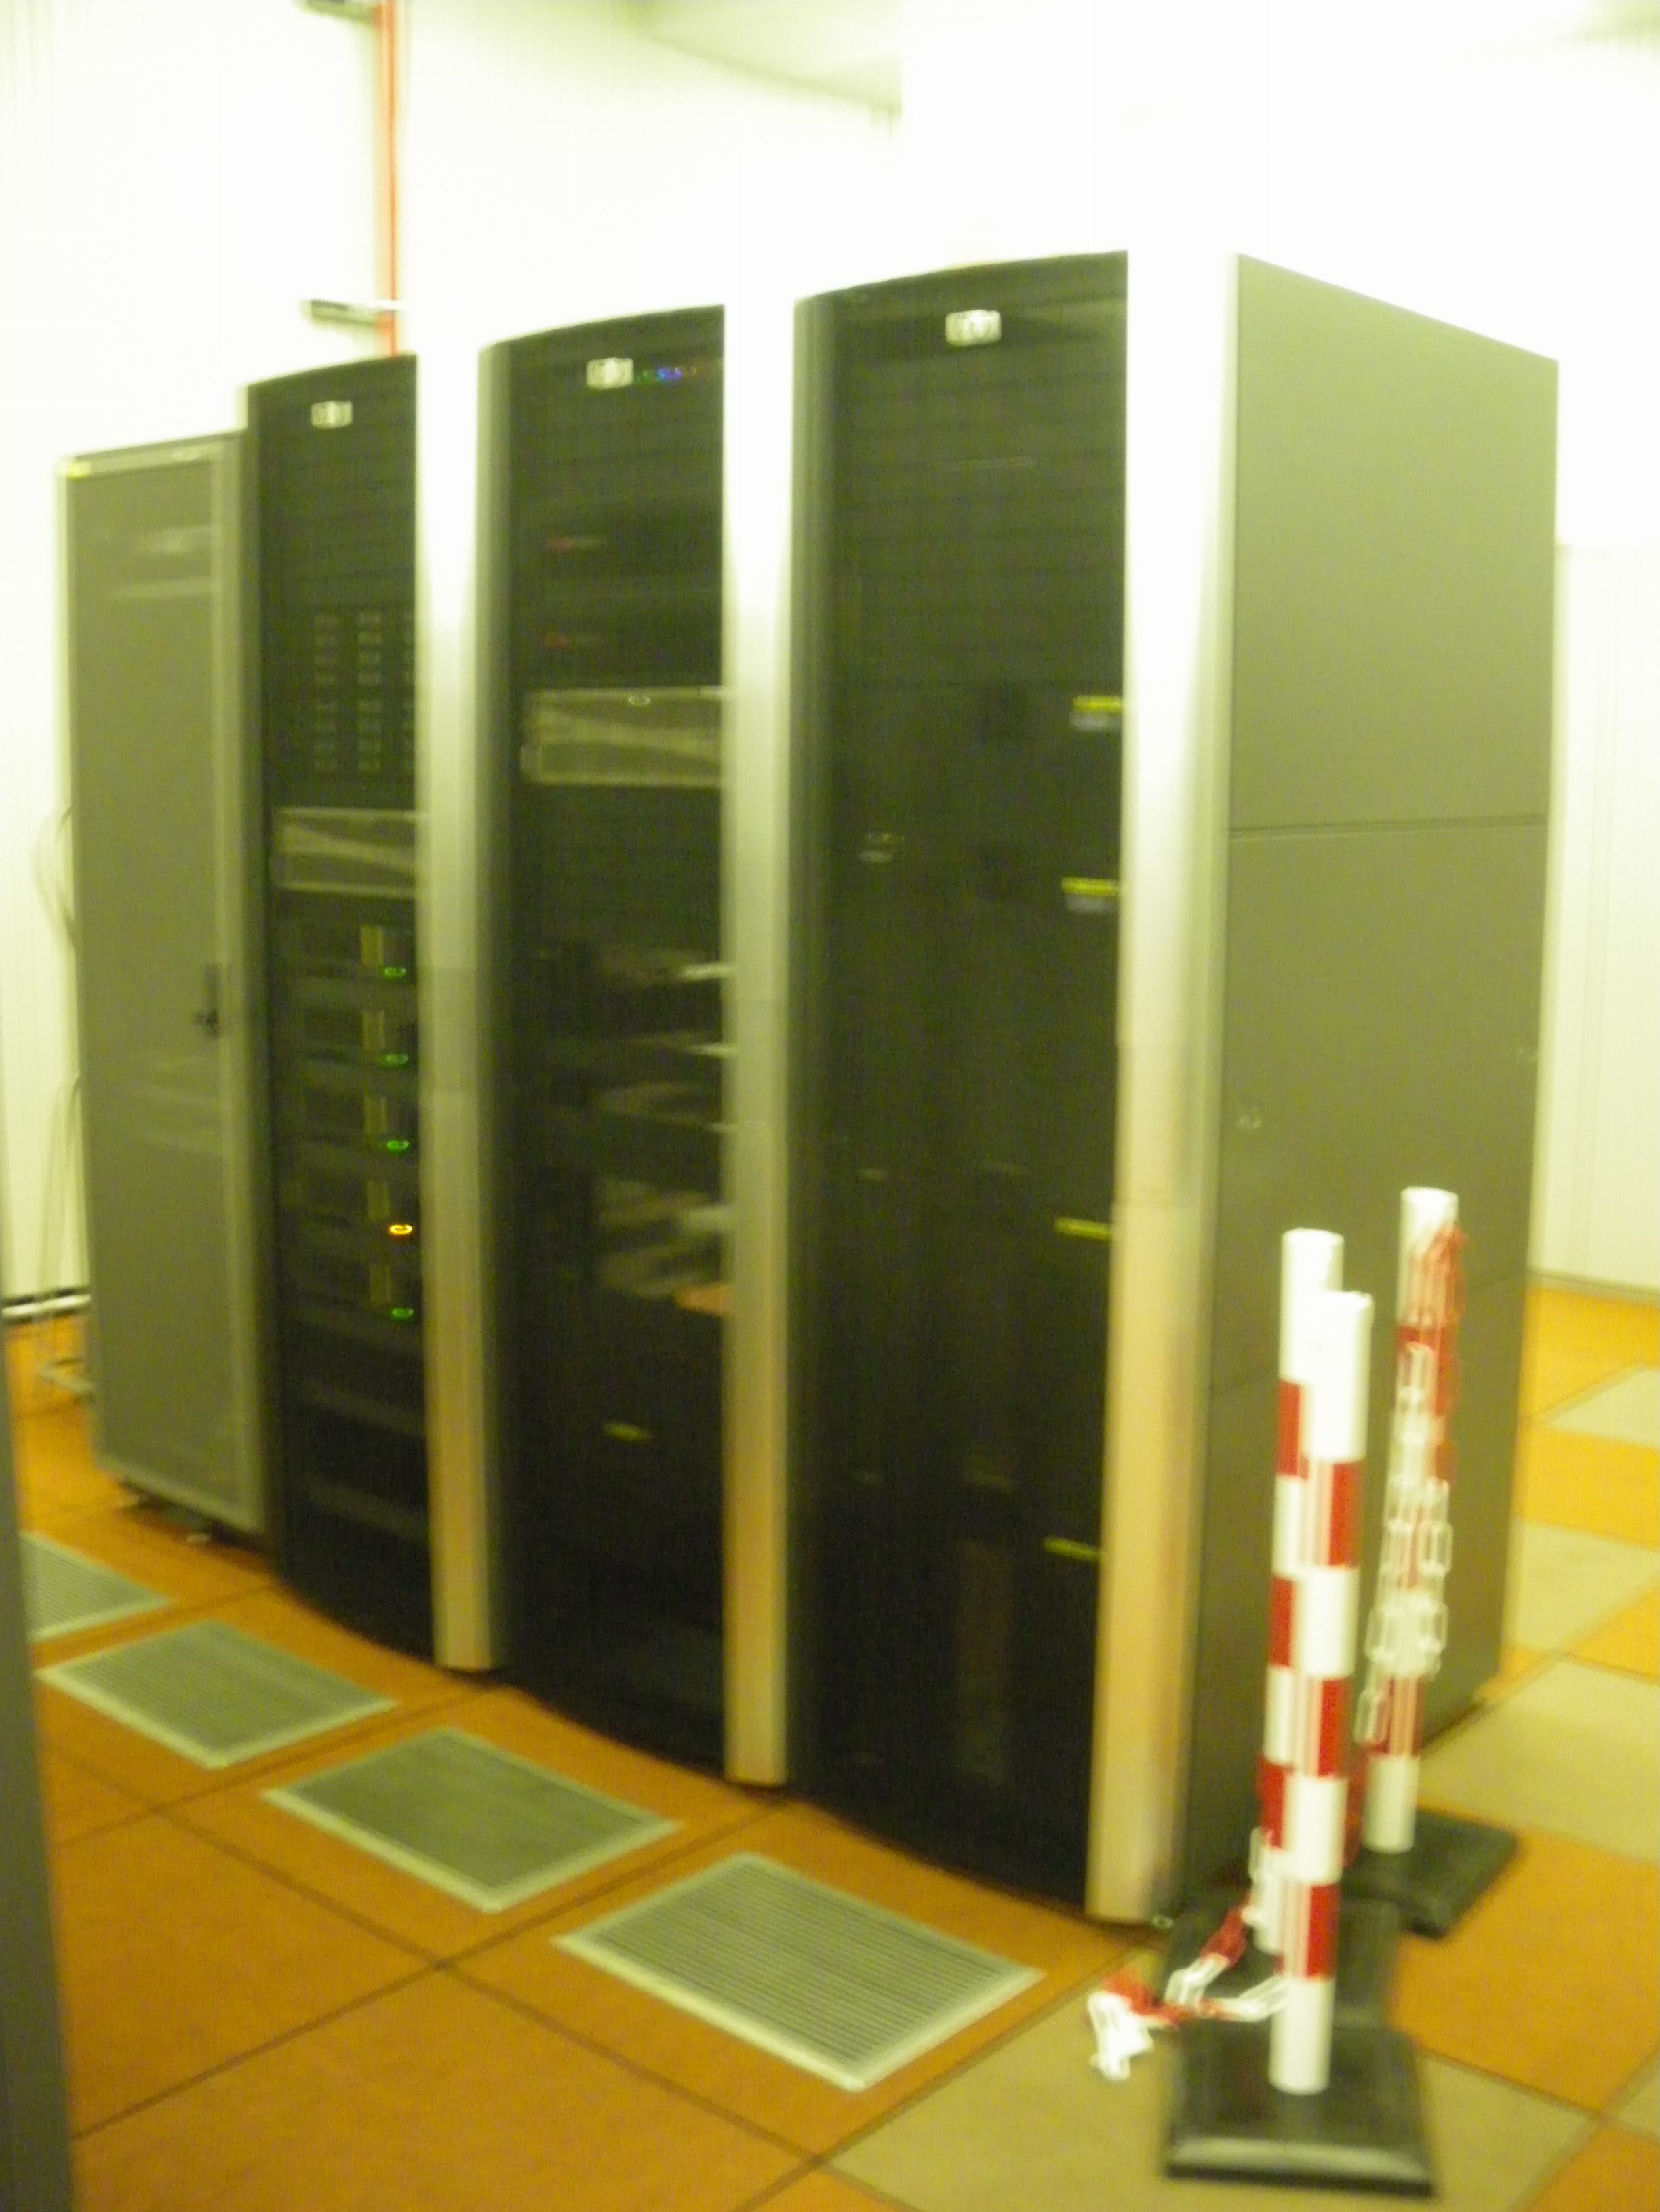 W407 server racks